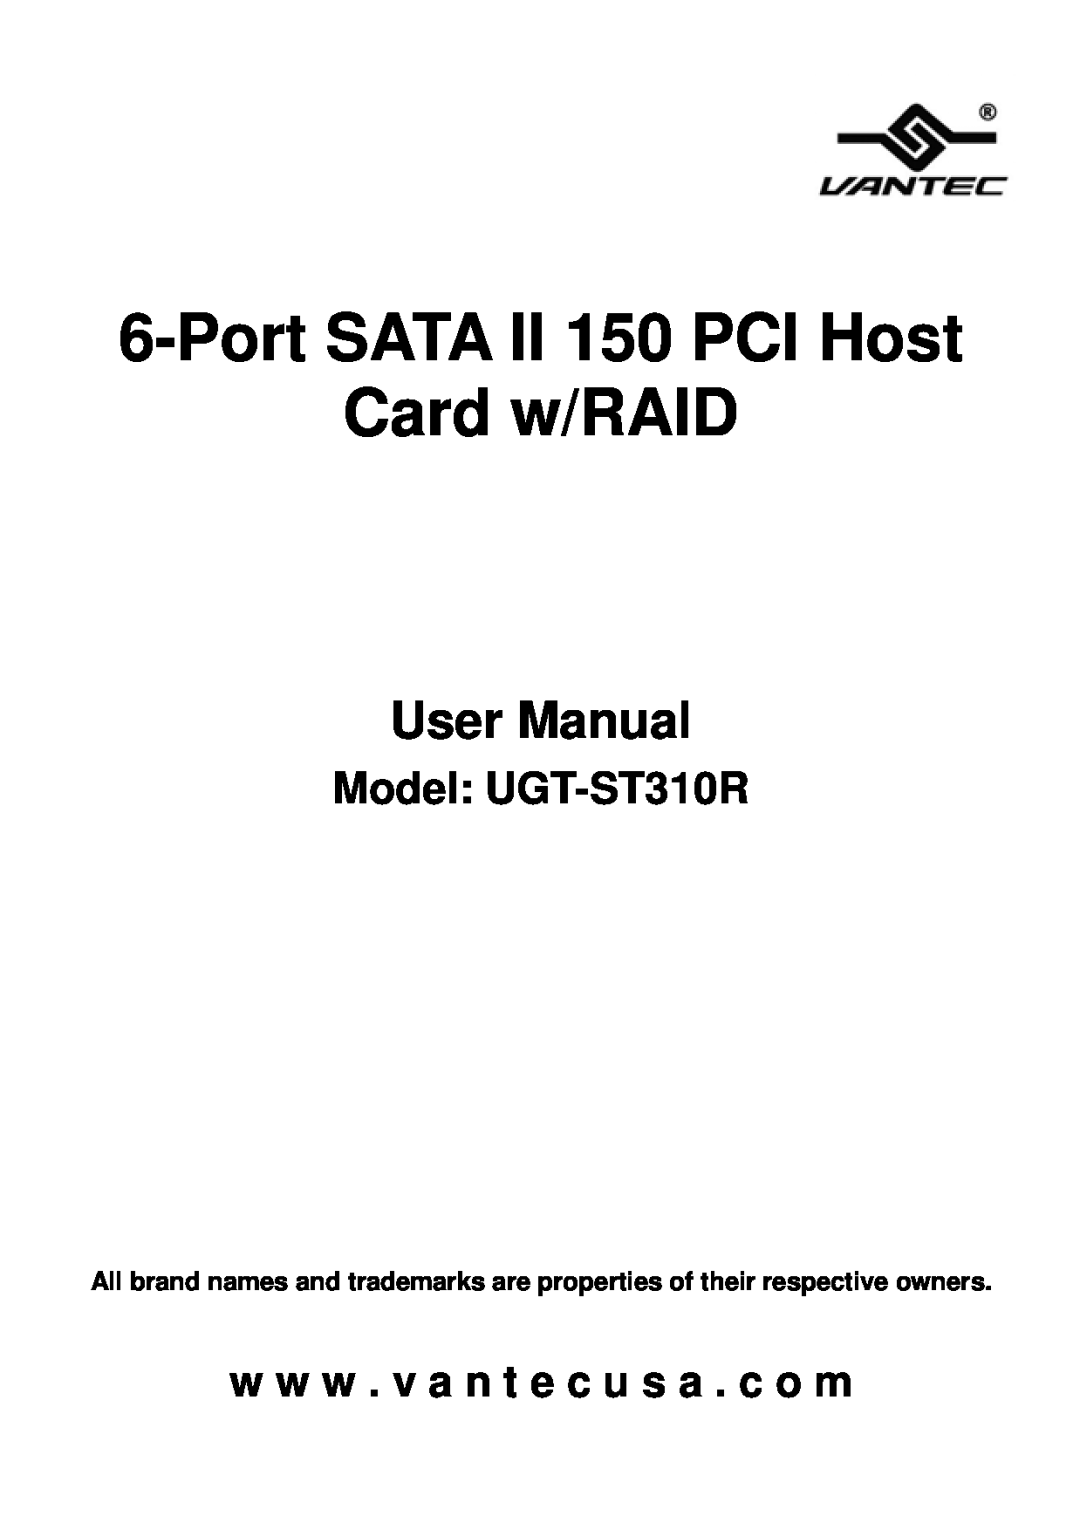 Vantec user manual Port SATA II 150 PCI Host Card w/RAID, User Manual, Model UGT-ST310R 